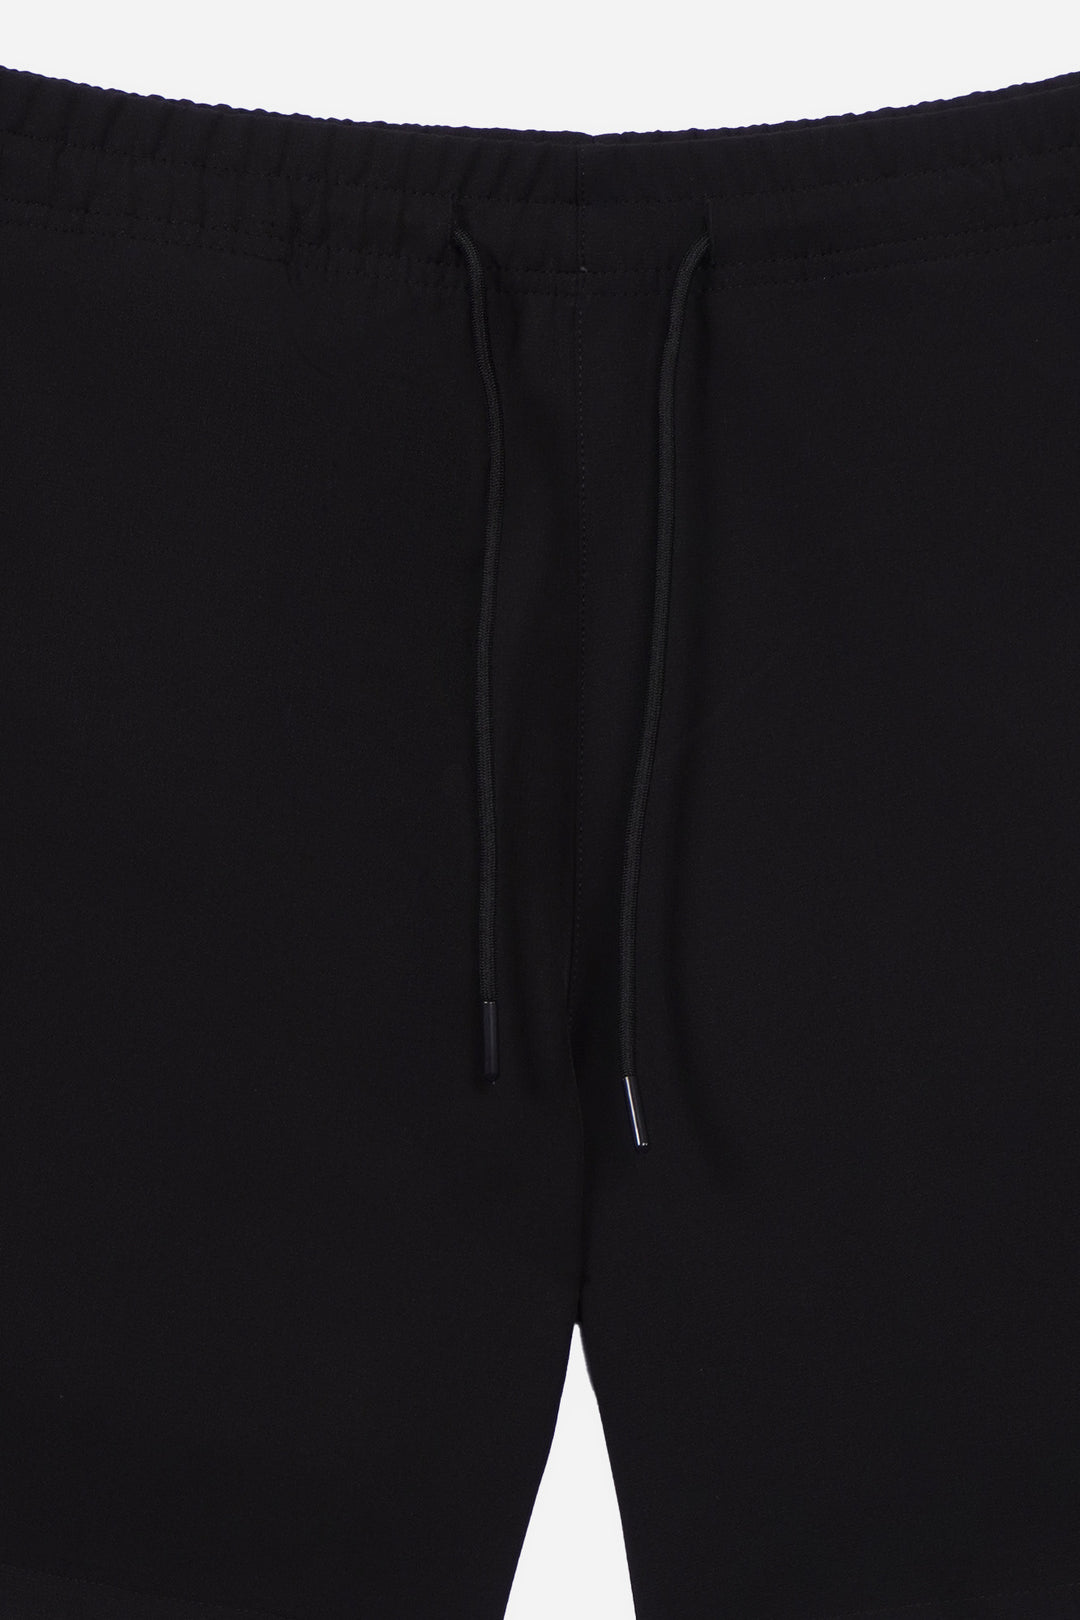 Modern Fit 4-Way Stretch Knit Nylon Shorts